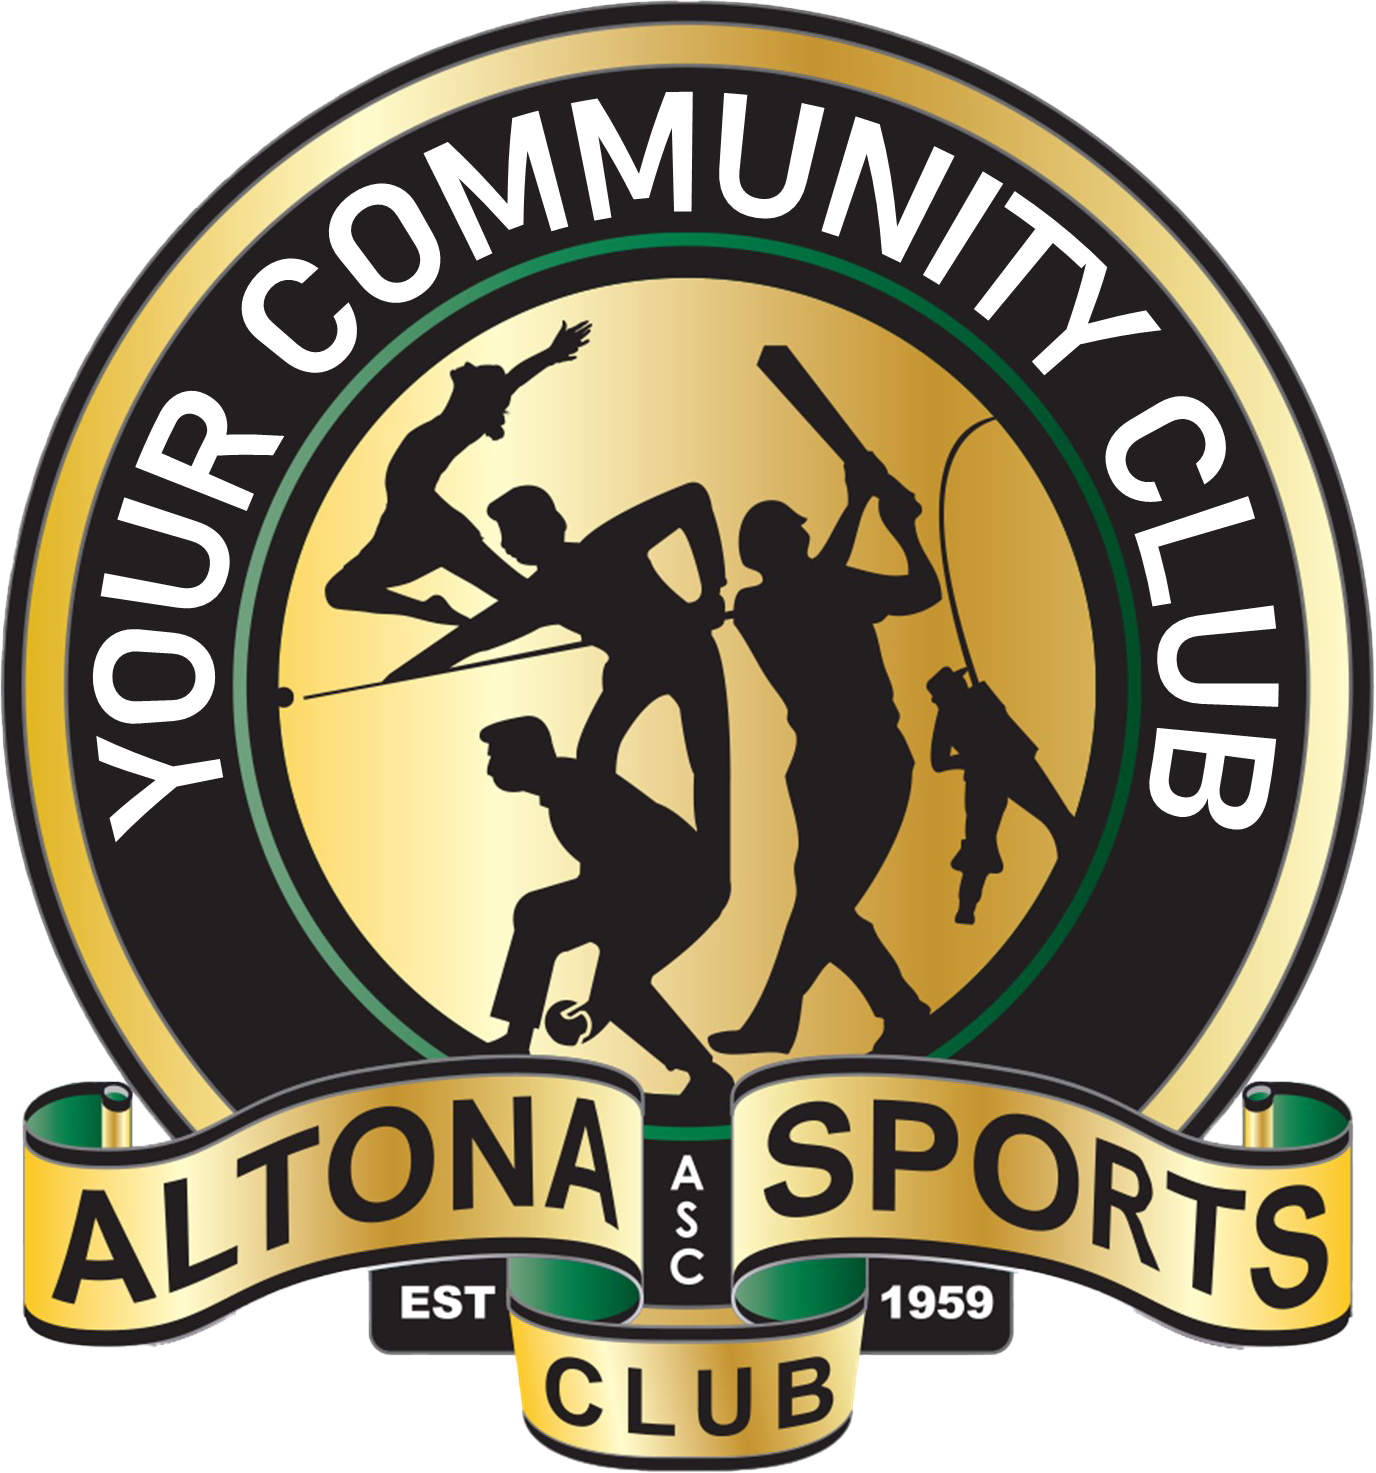 Altona Sports Club  Dining, Entertainment, Sports & Functions